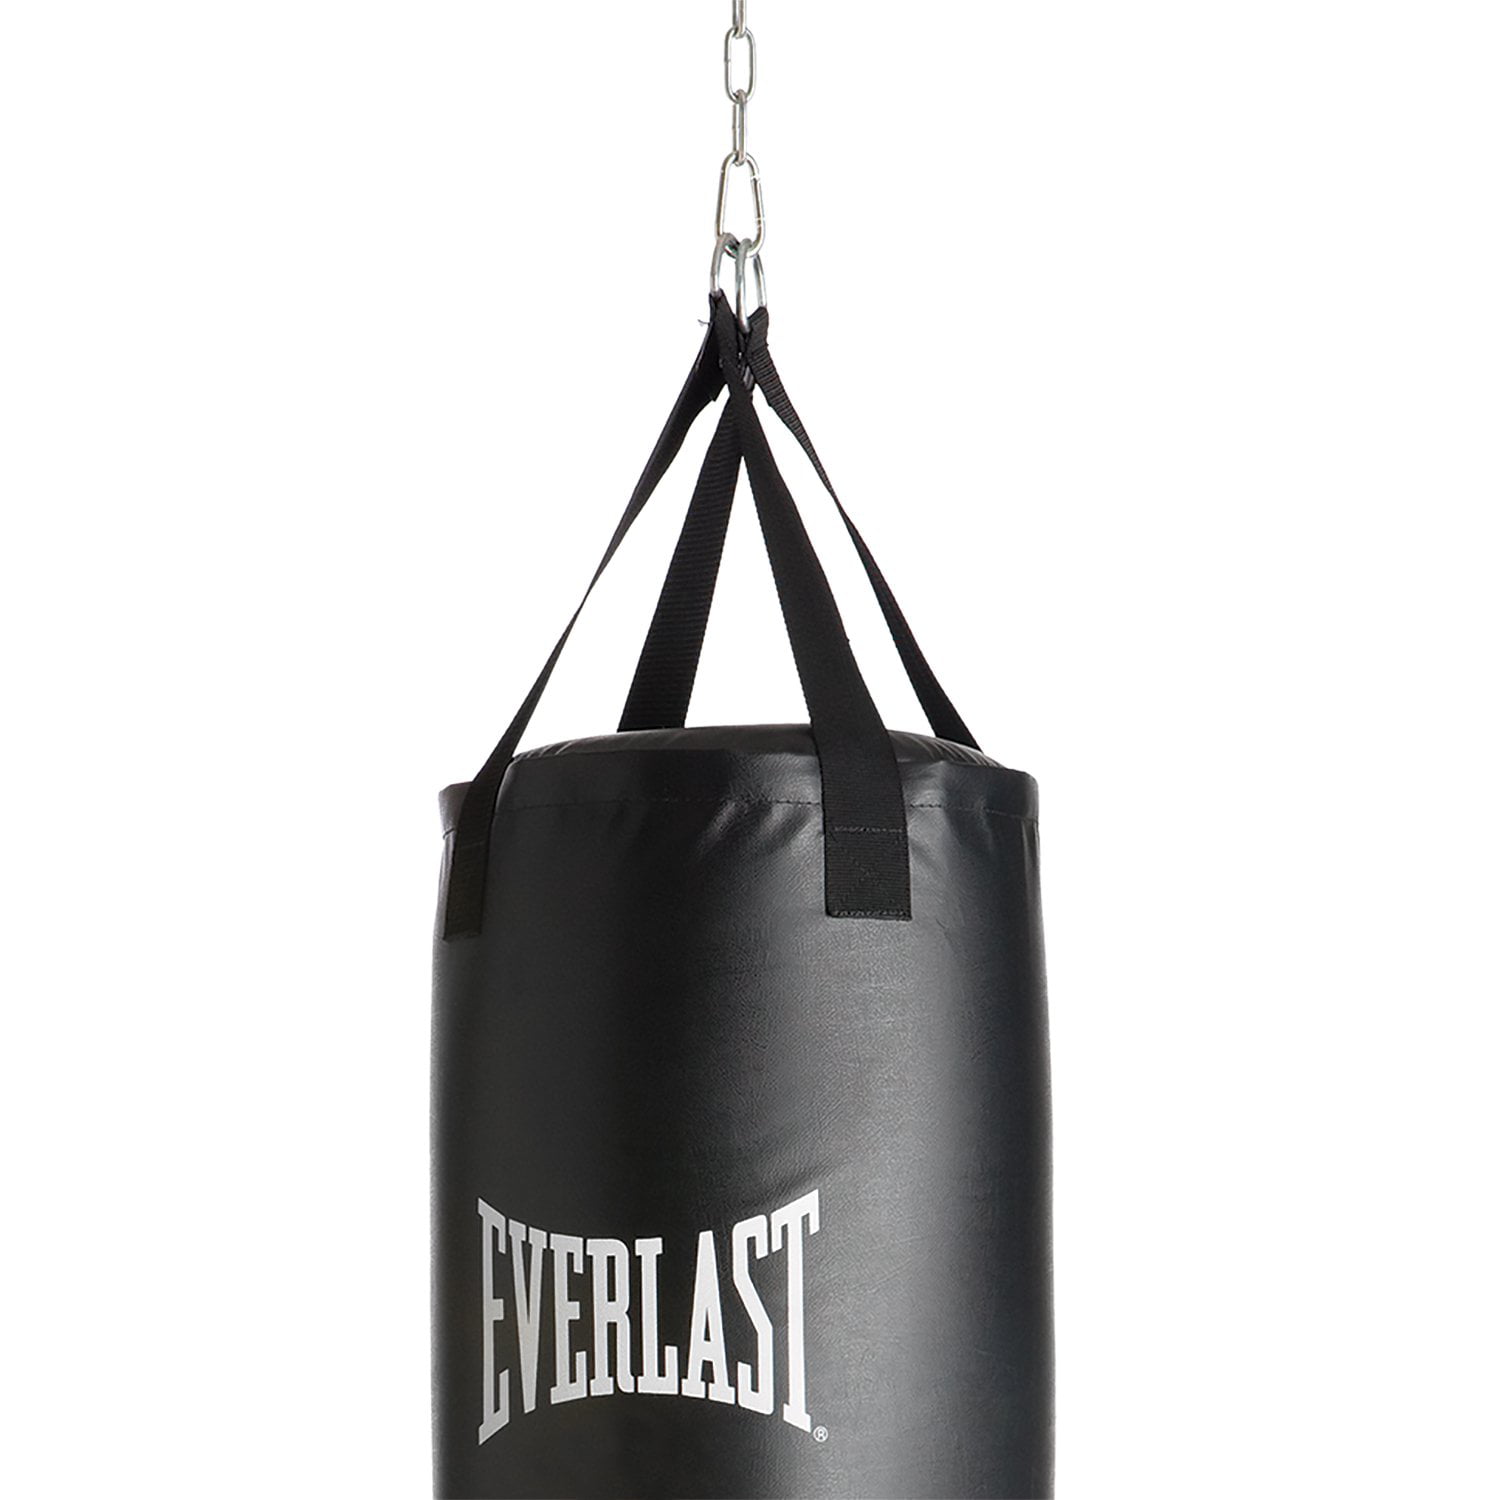 Everlast Nevatear Heavy Boxing Bag, Black, 100-lbs | Canadian Tire